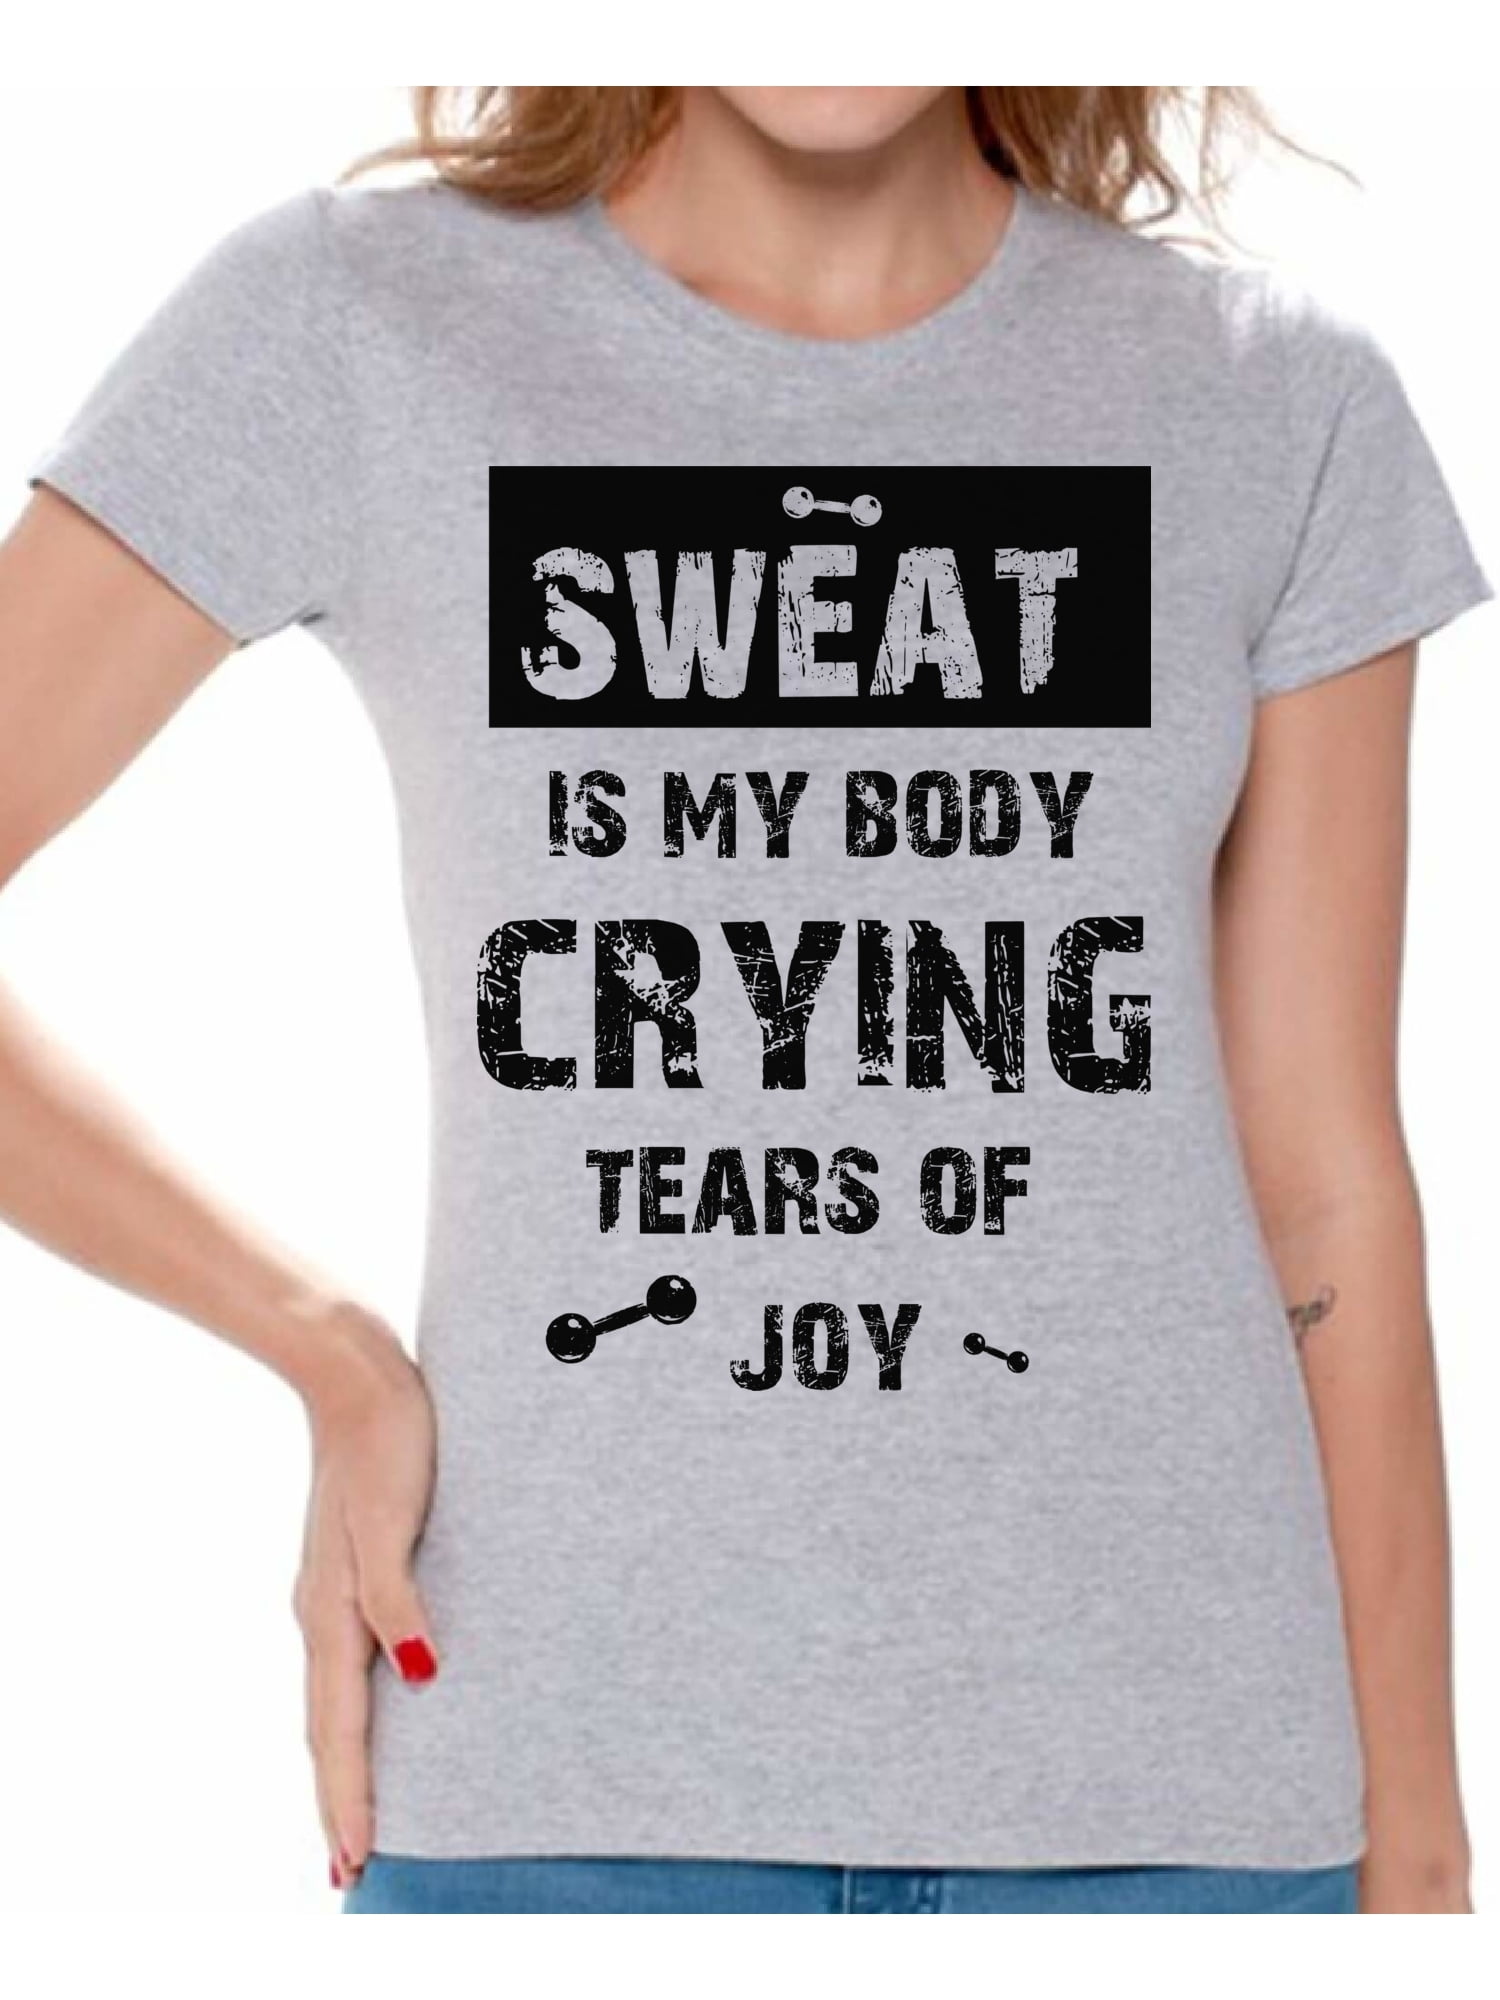 Buy > gym tee shirt > in stock